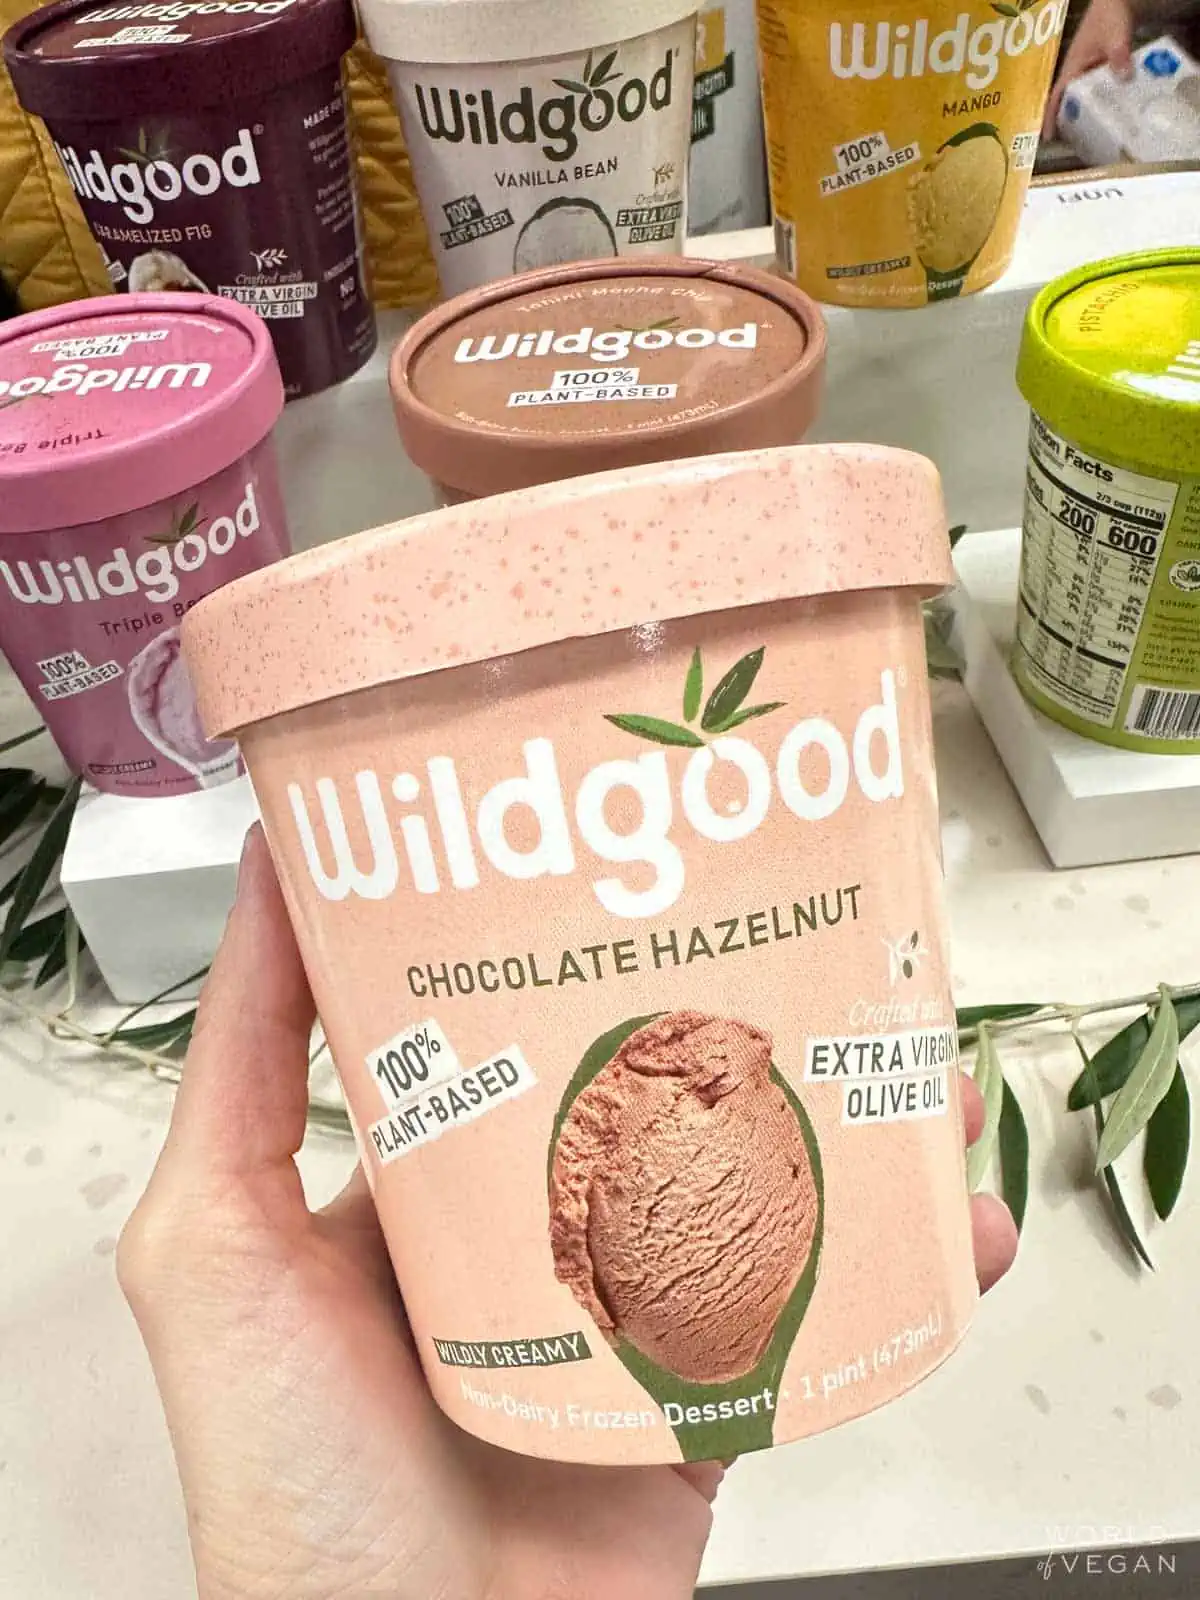 A carton of Wildgood brand plant-based ice cream.